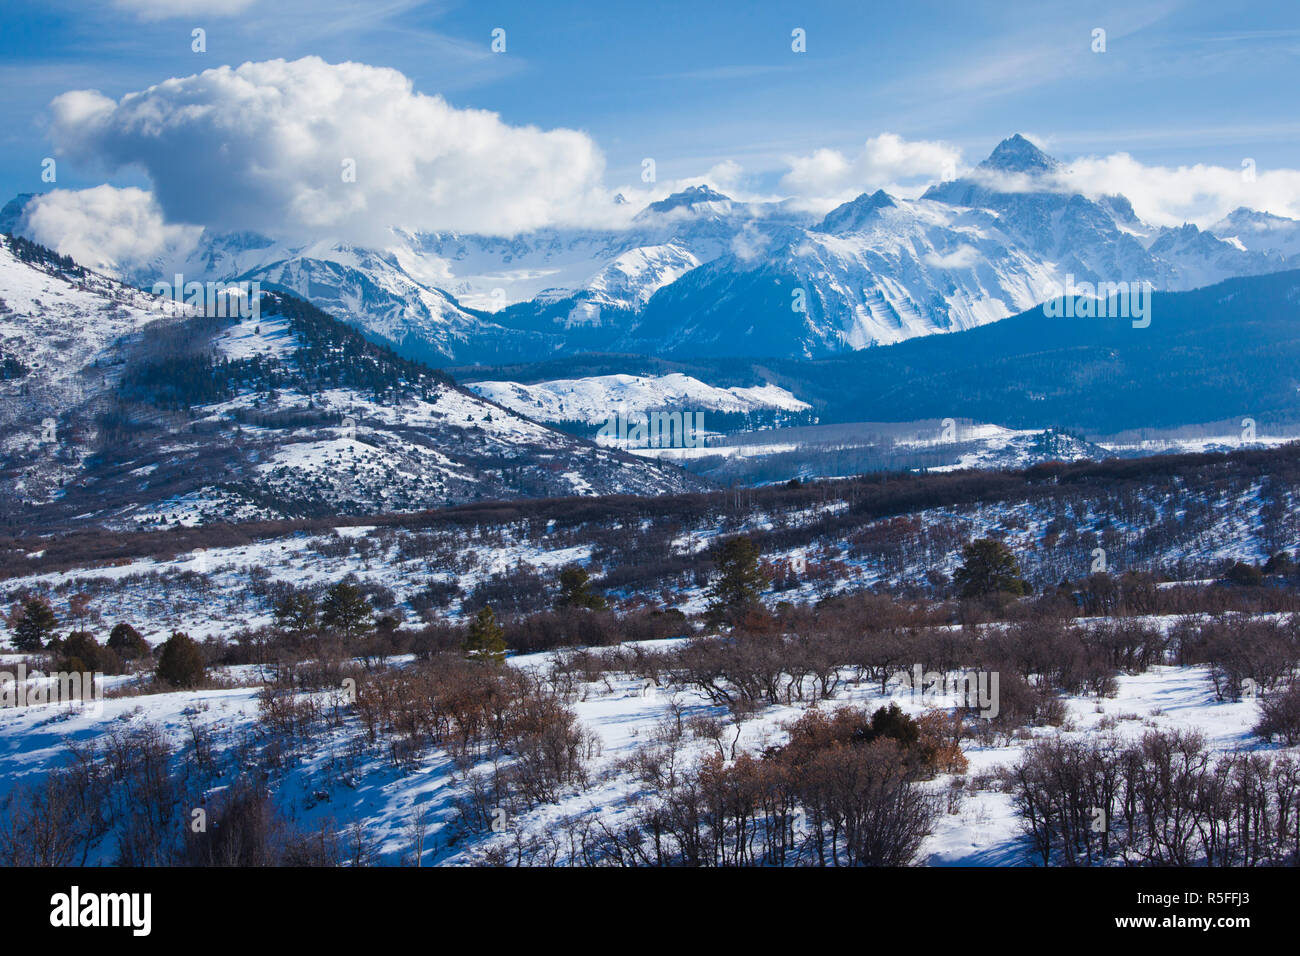 USA, Colorado, Dallas Divide, winter view of Mount Sneffels Wilderness Stock Photo